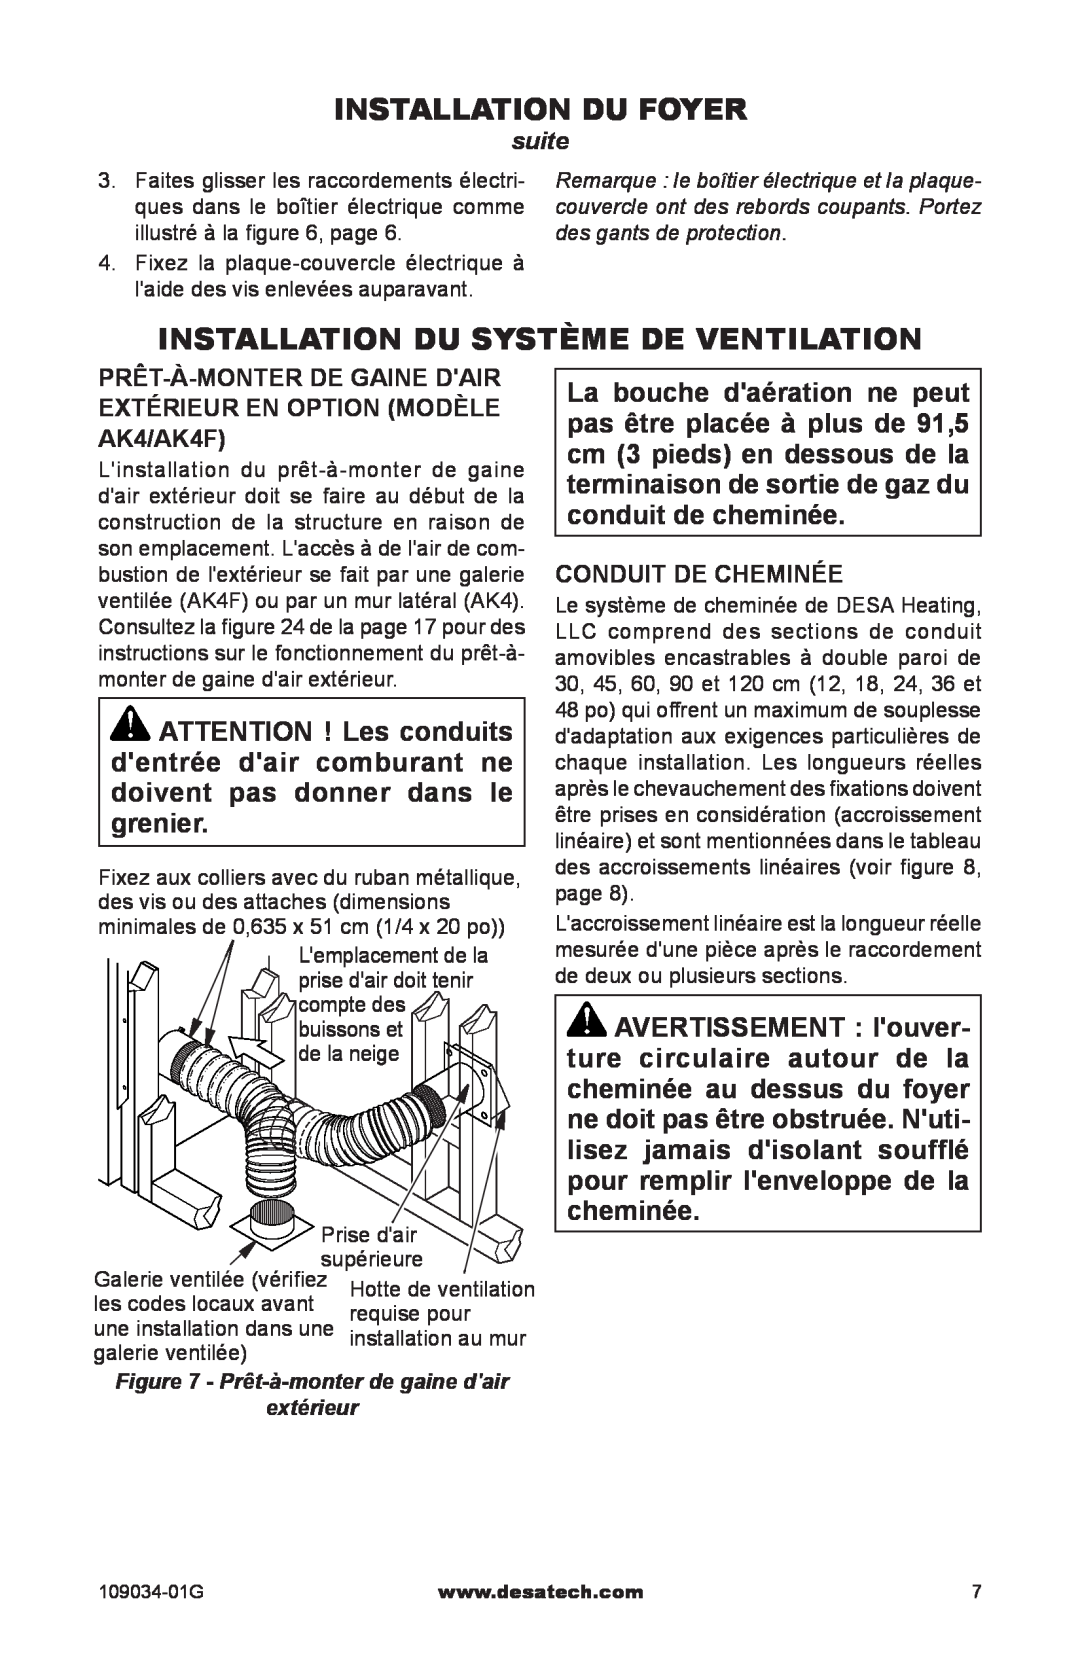 Desa (V)B36I, (V)B36LI, CWB36C Installation du foyer, Installation du système de ventilation, Conduit de cheminée 